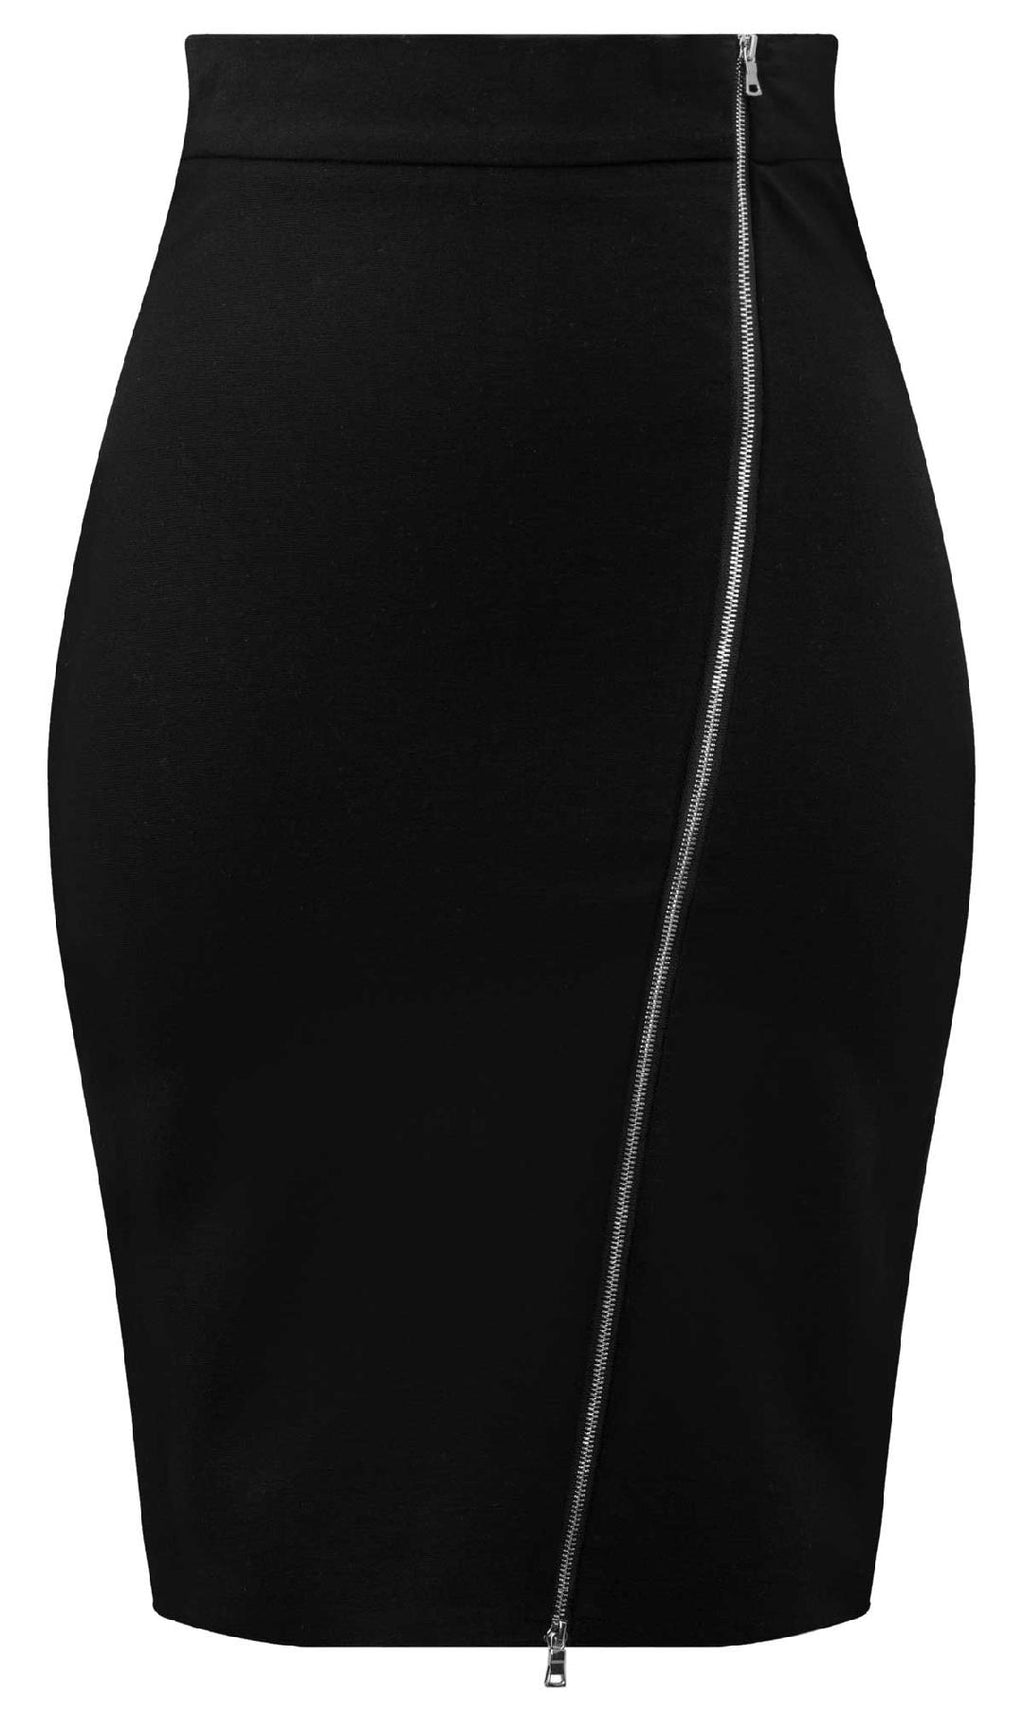 Moto Babe Pencil Skirt in Black